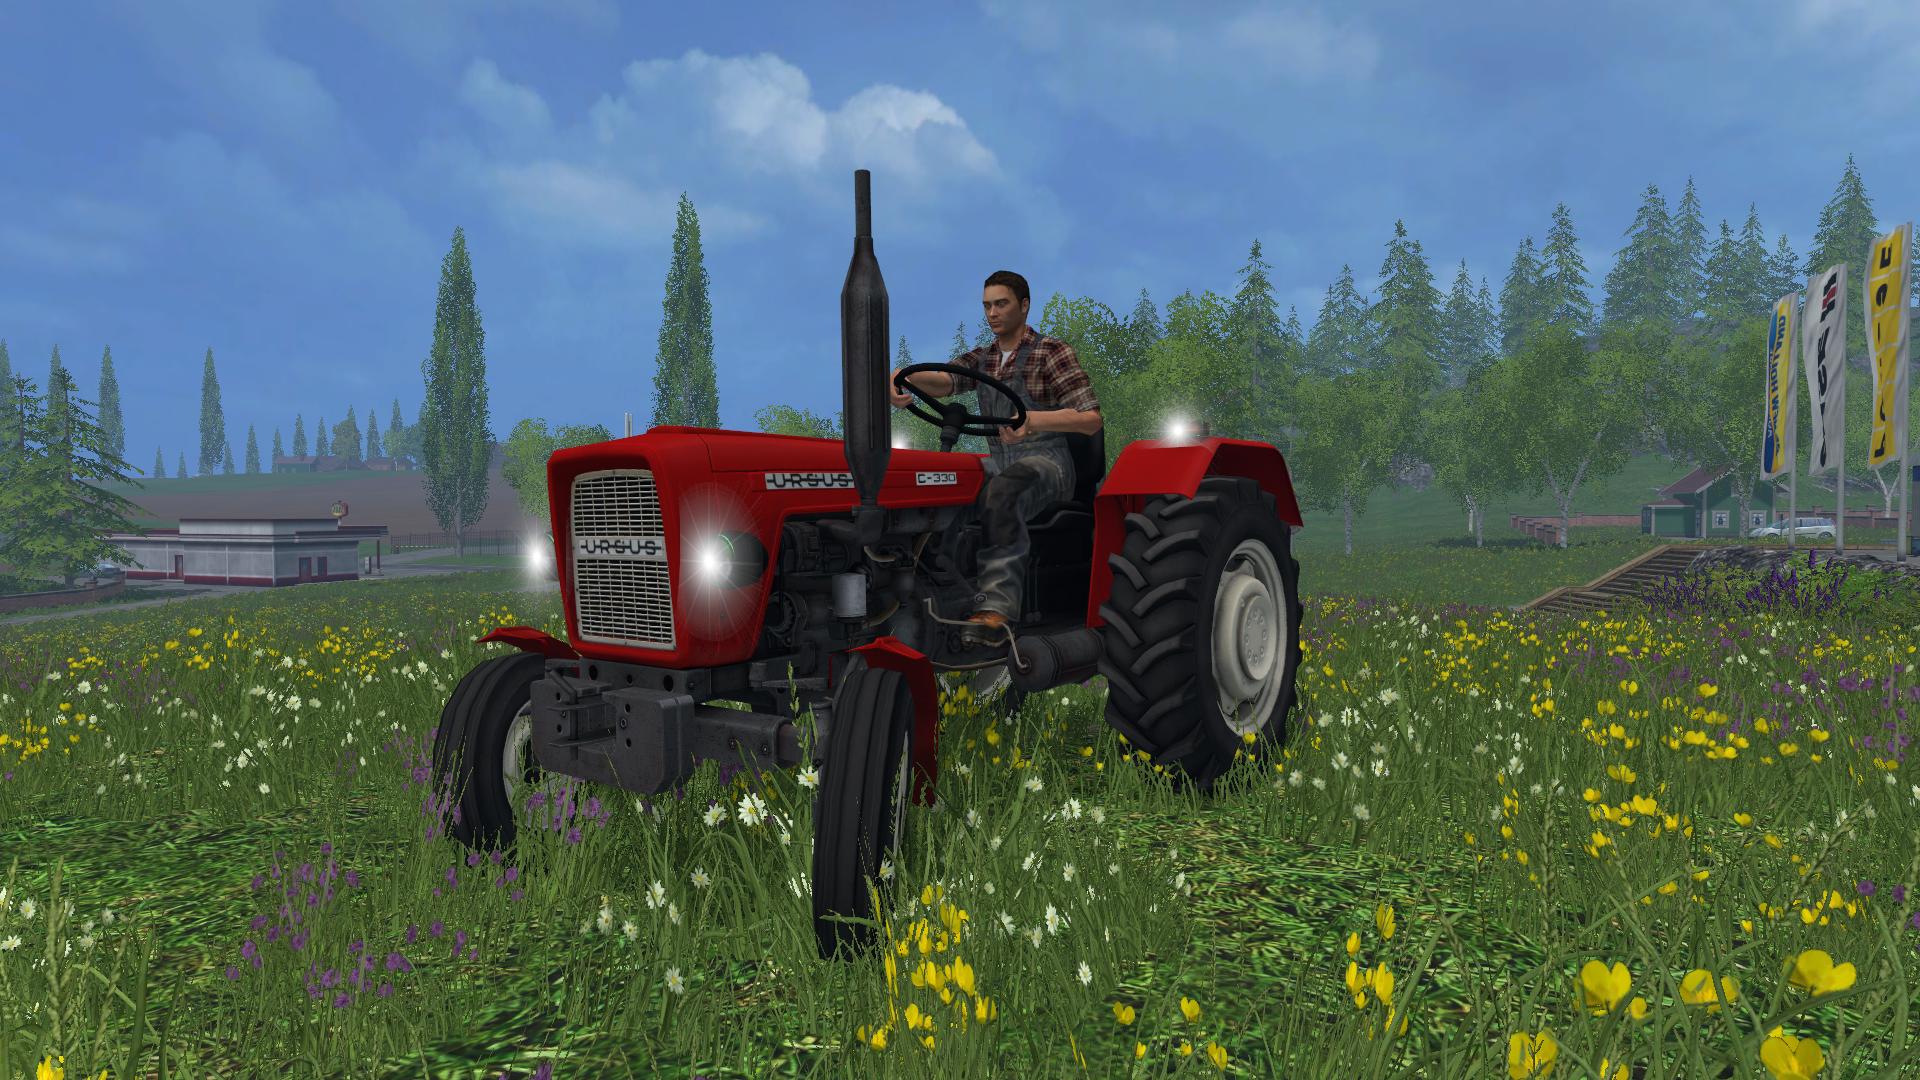 Fs 15 Tractors Farming Simulator 19 17 15 Mods Fs19 17 15 Mods